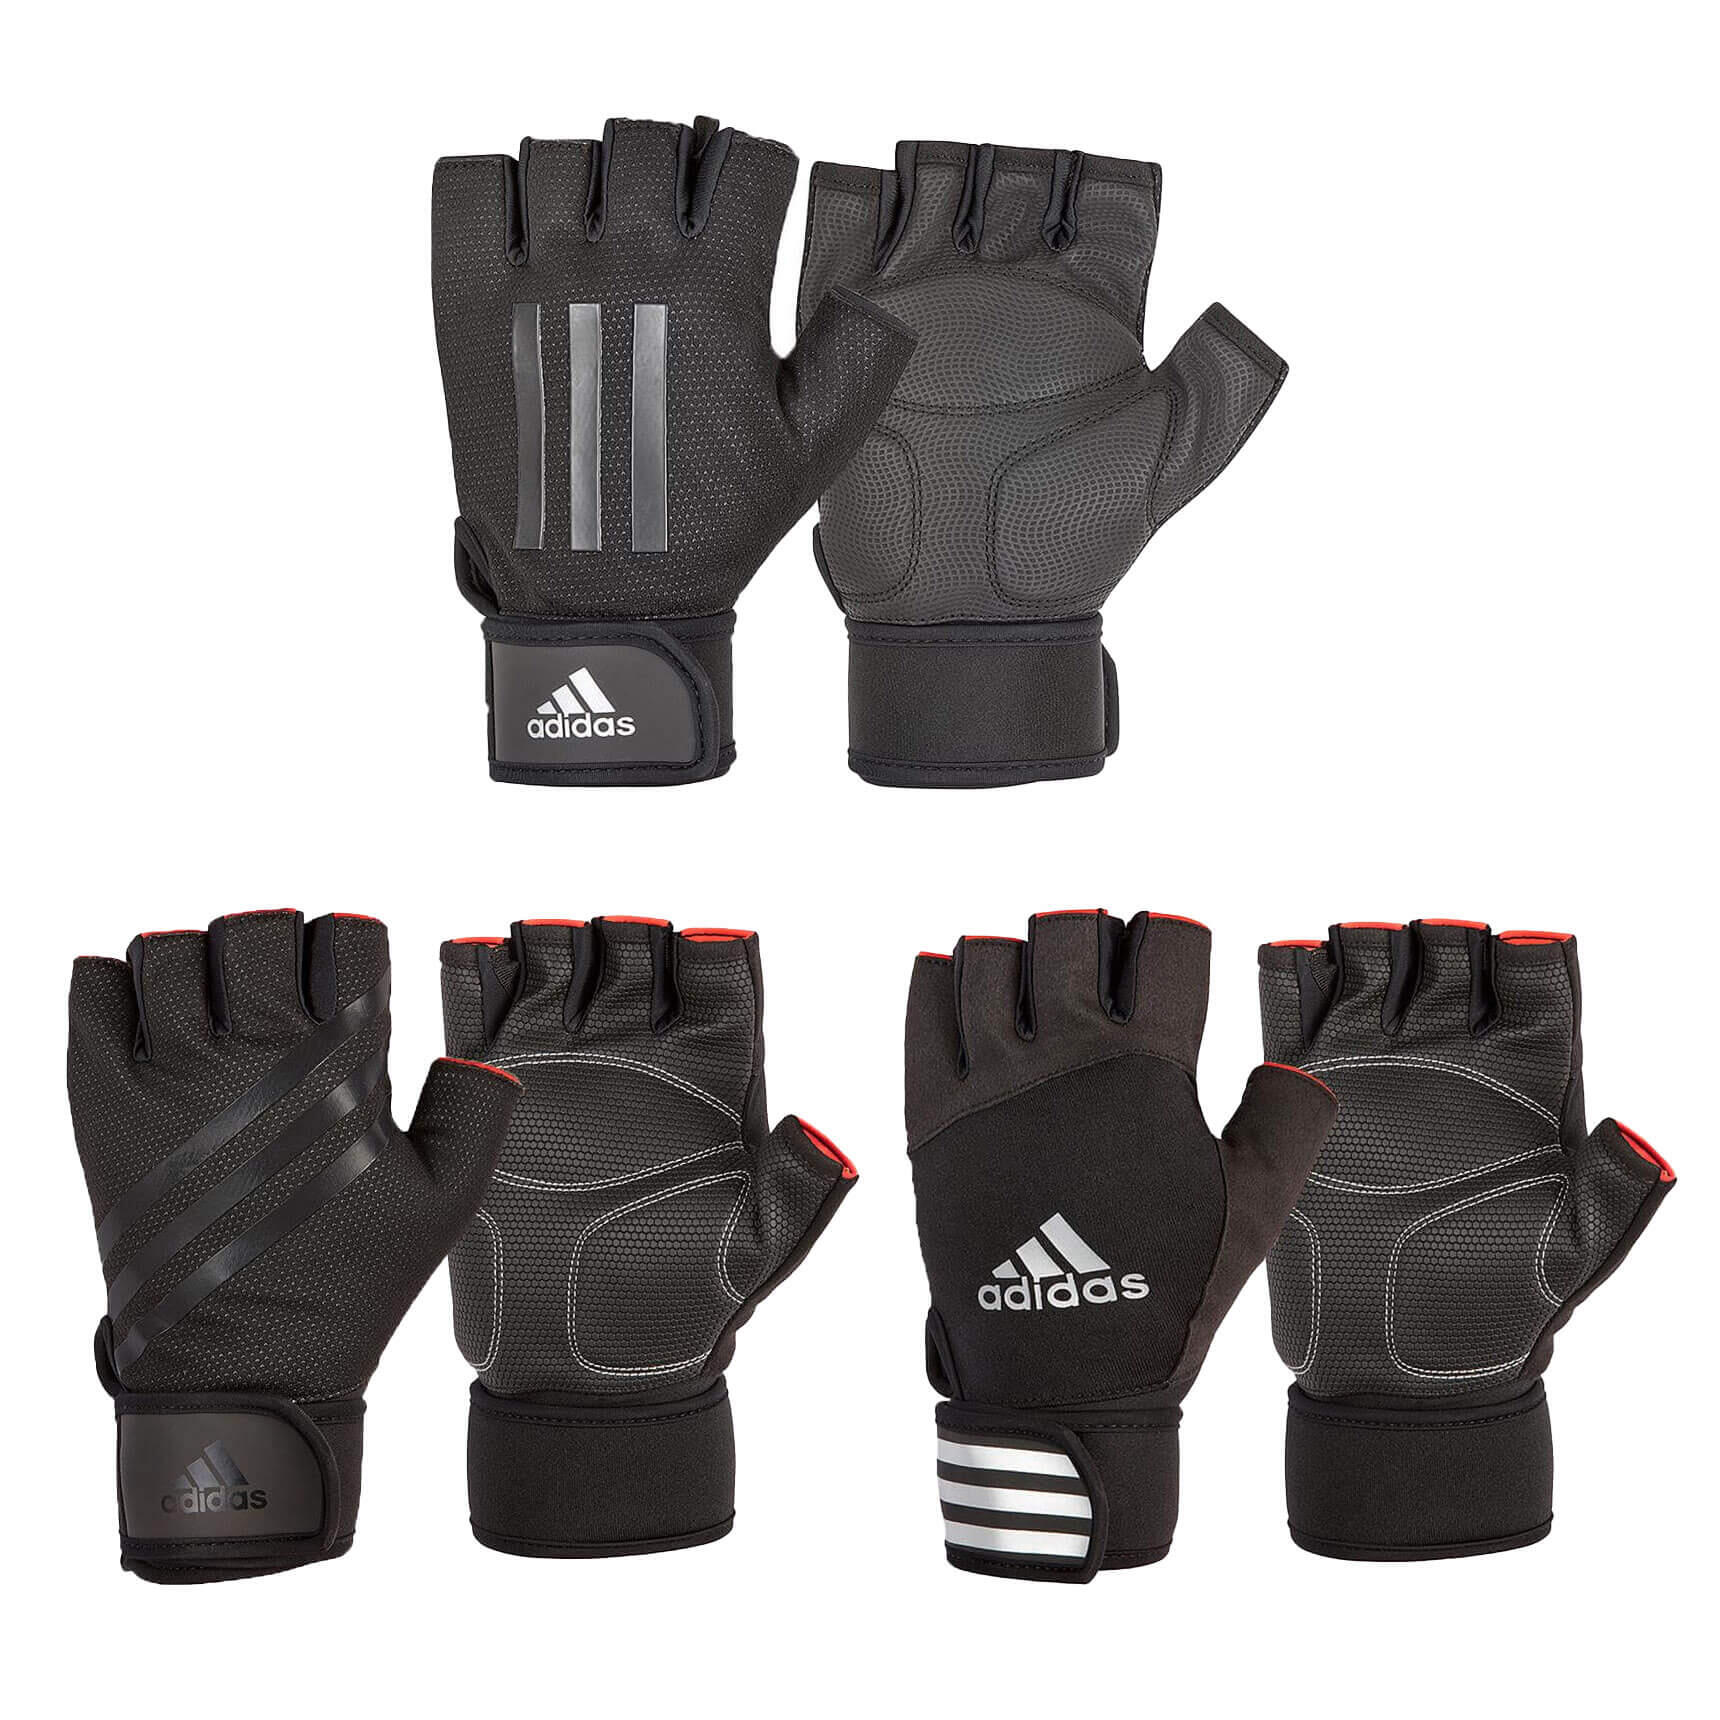 Adidas Half Finger Weight Lifting Gym Gloves, Black/White 5/5